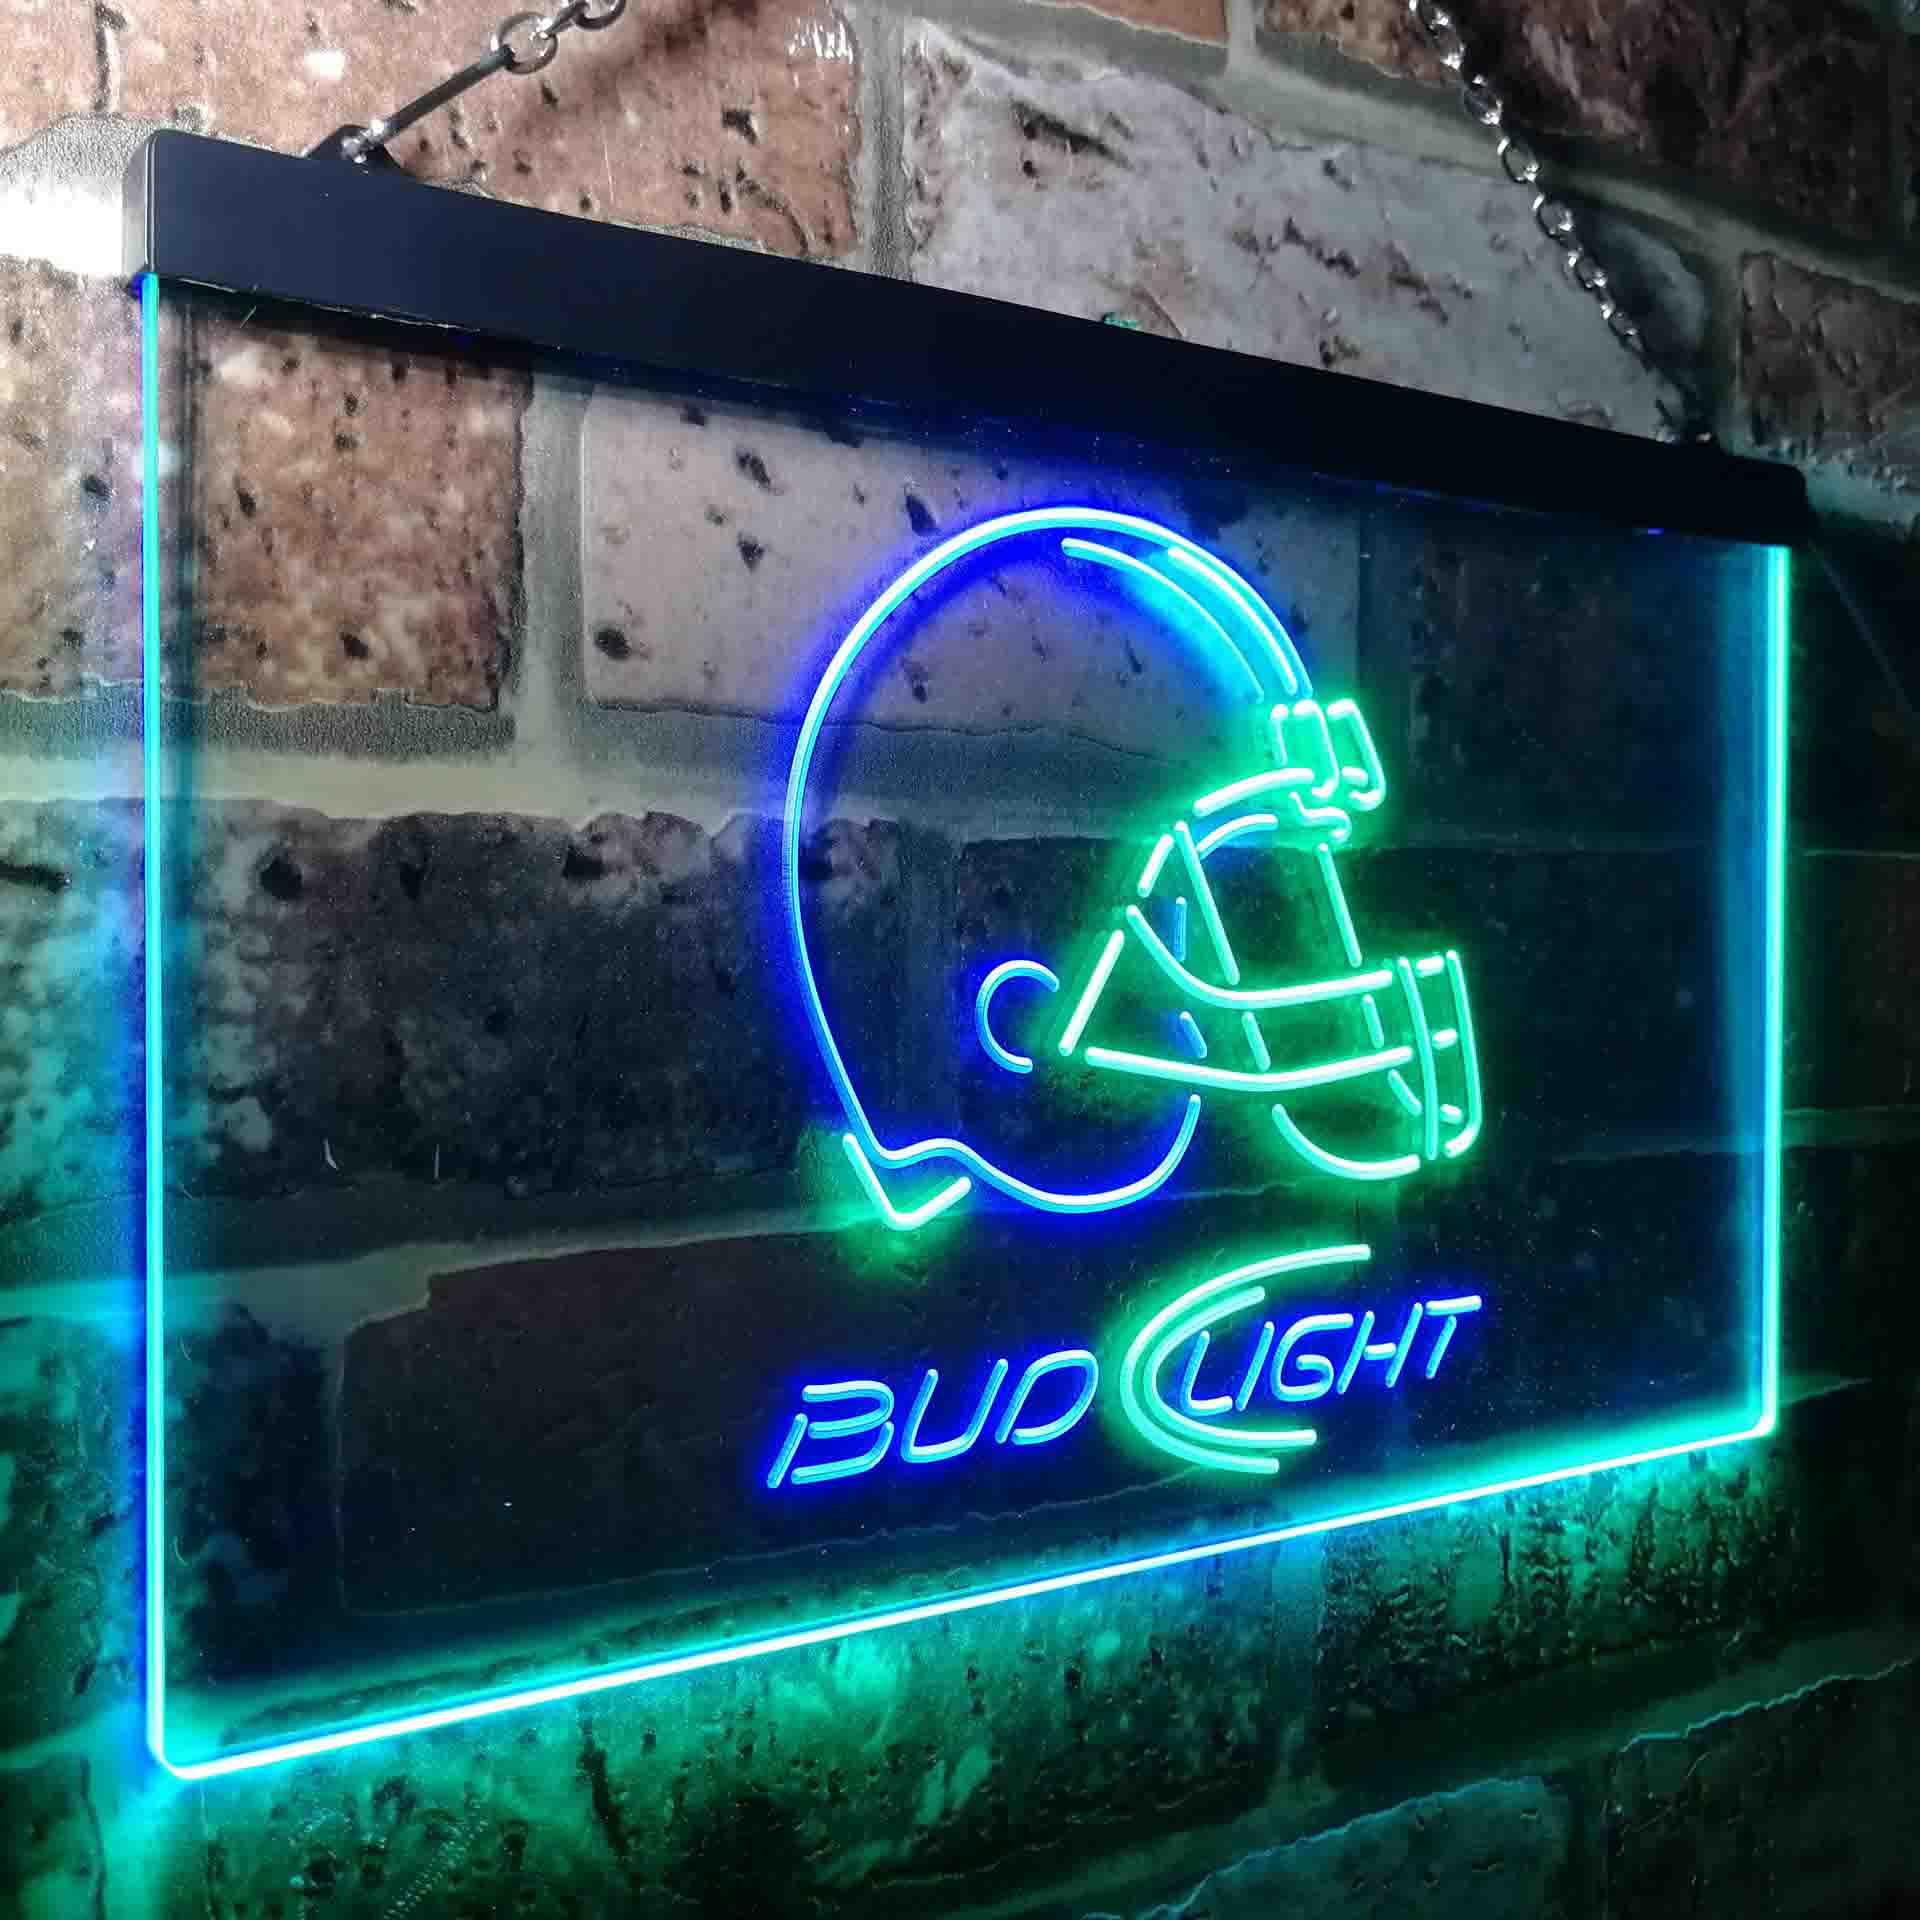 Cleveland Browns Bud Light Neon-Like LED Sign